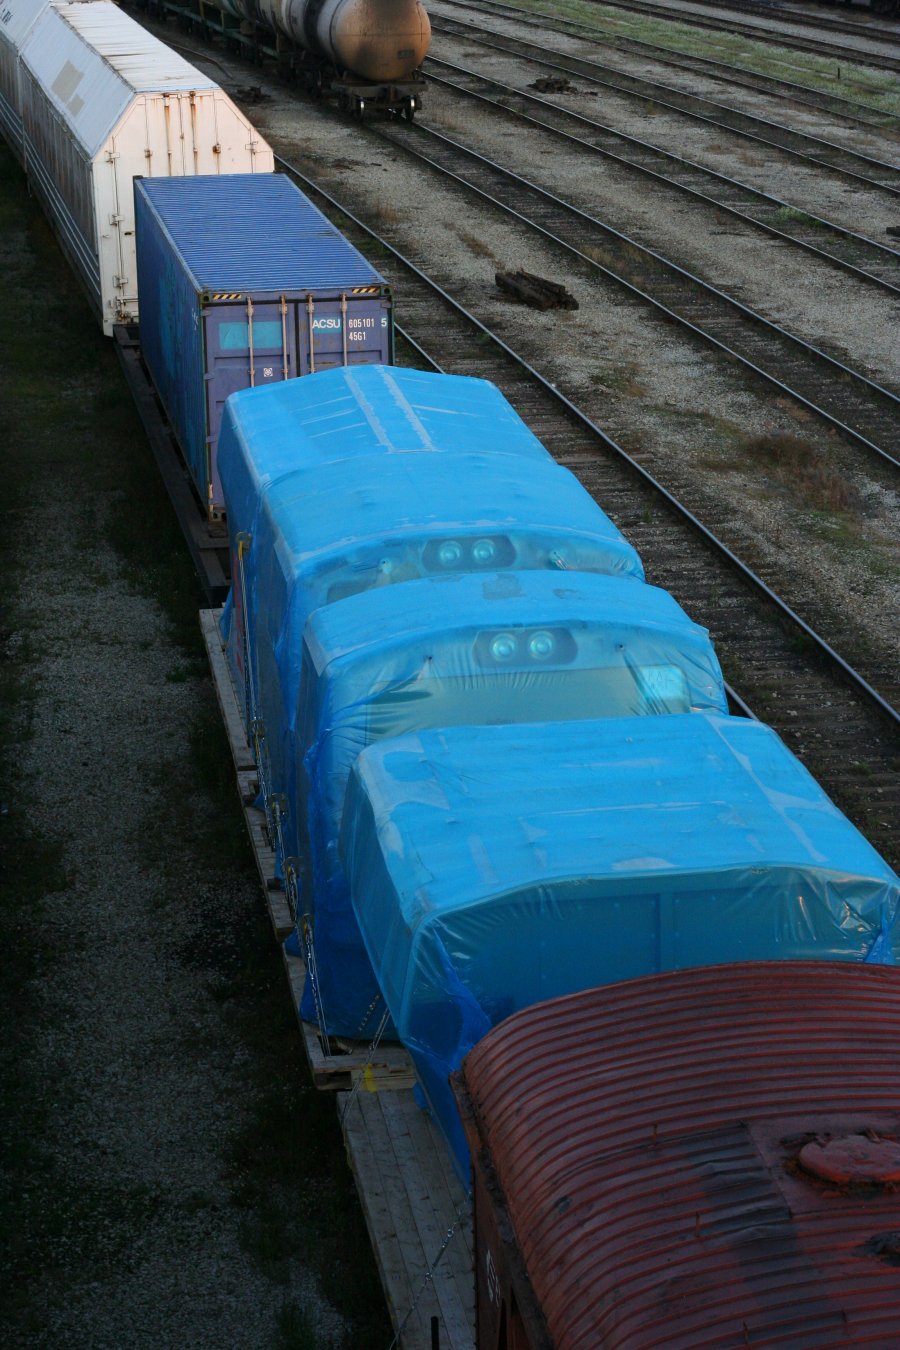 Details of a TE33A locomotive
27.08.2011
Ülemiste
